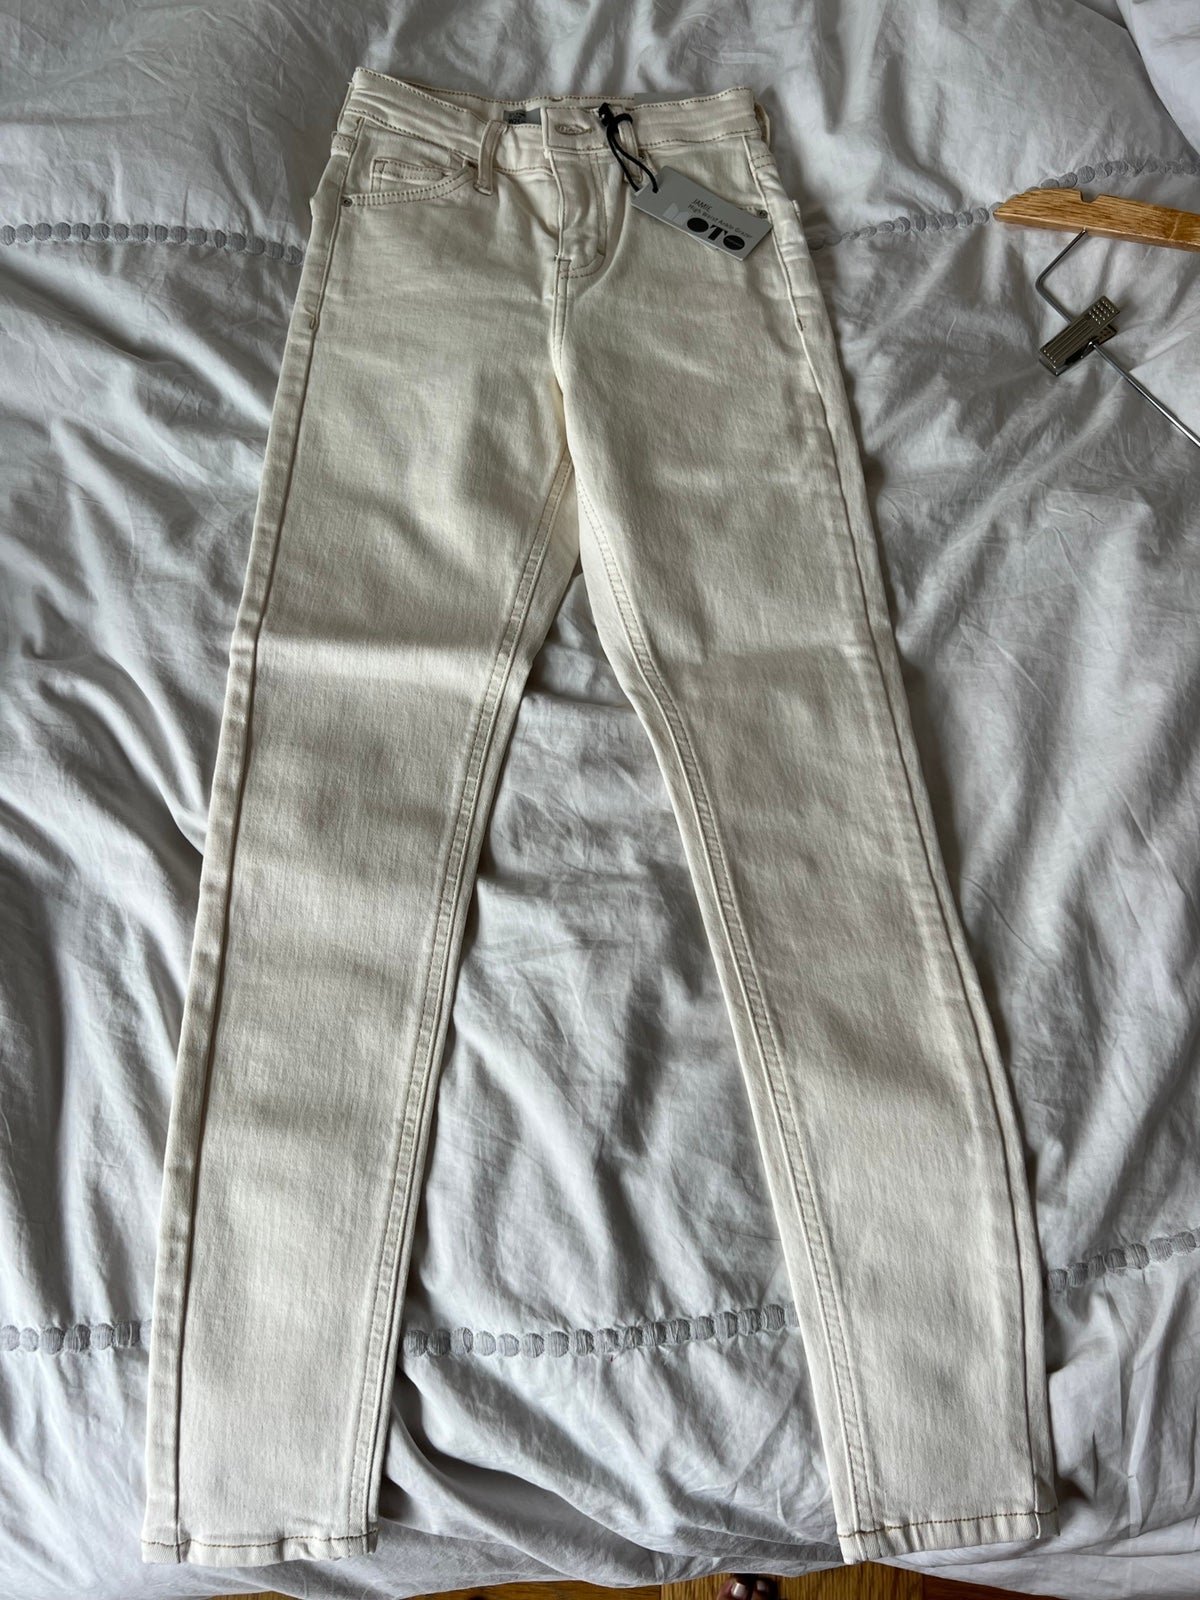 the Lowest price TopShop Jamie Jeans keifZbWTI just buy